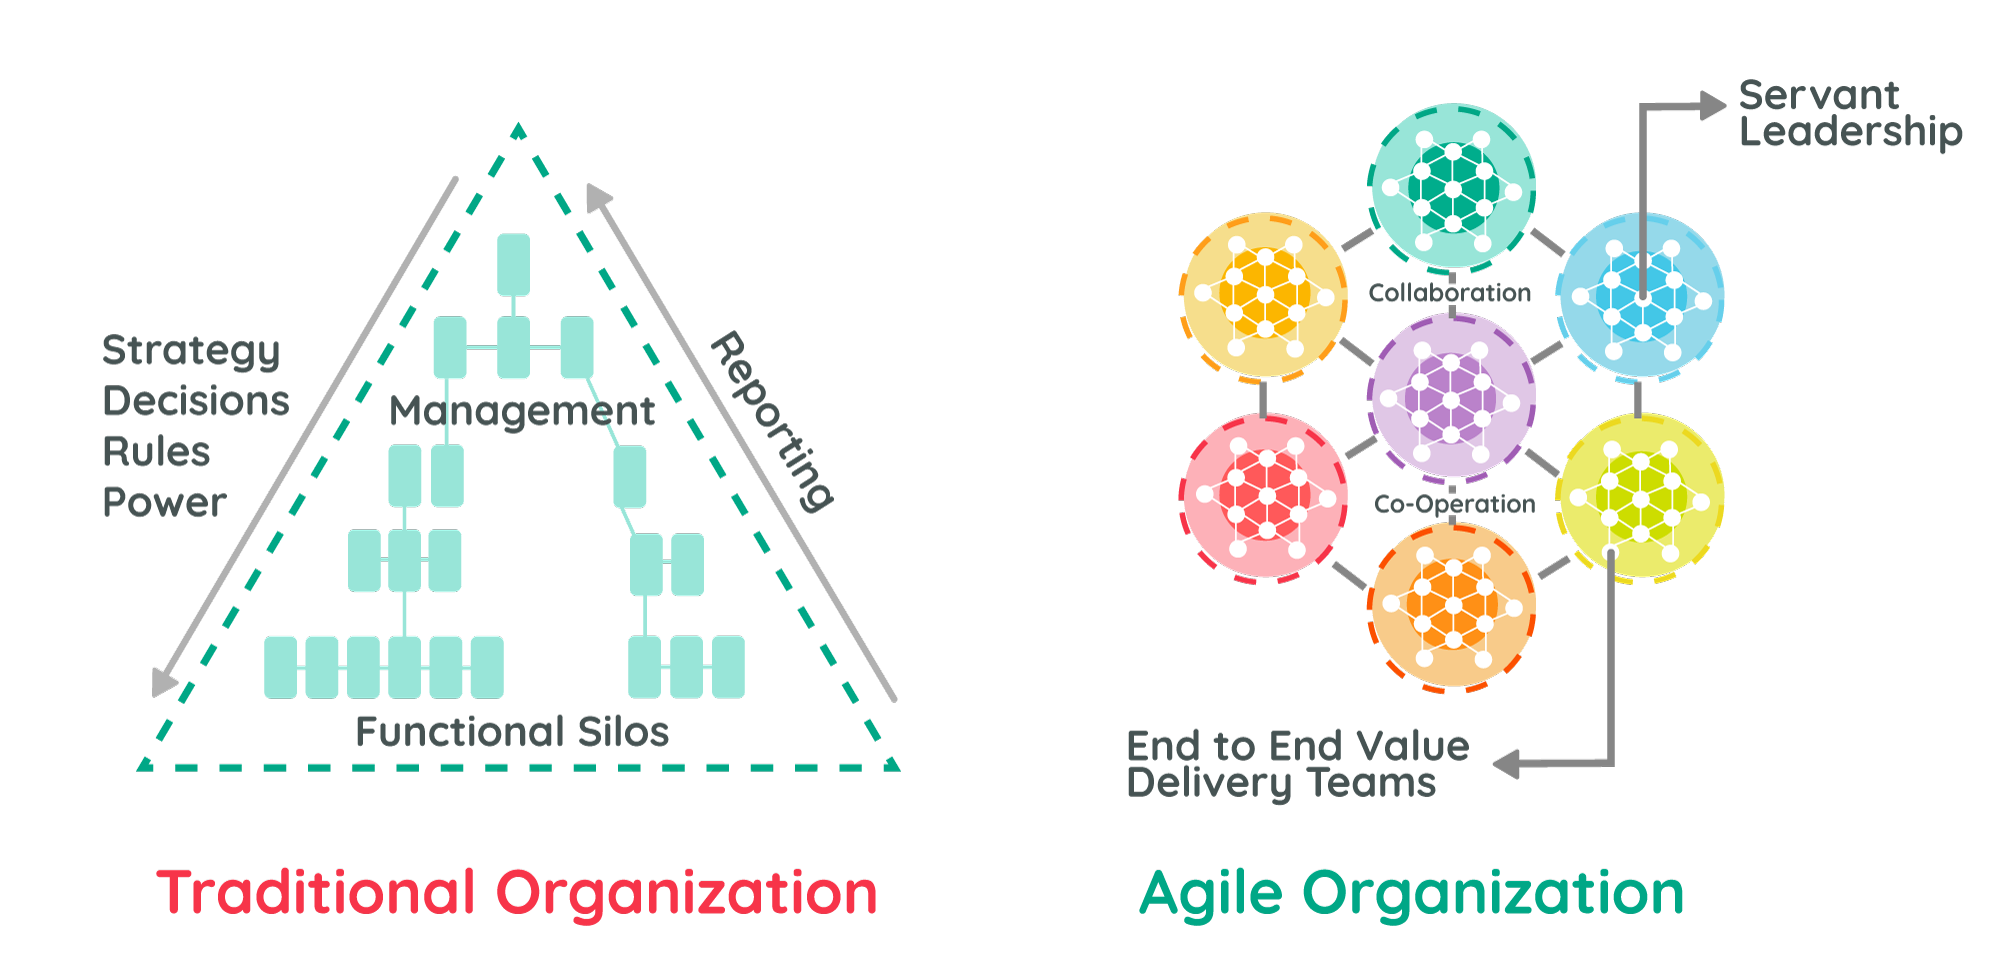 Agile Organization